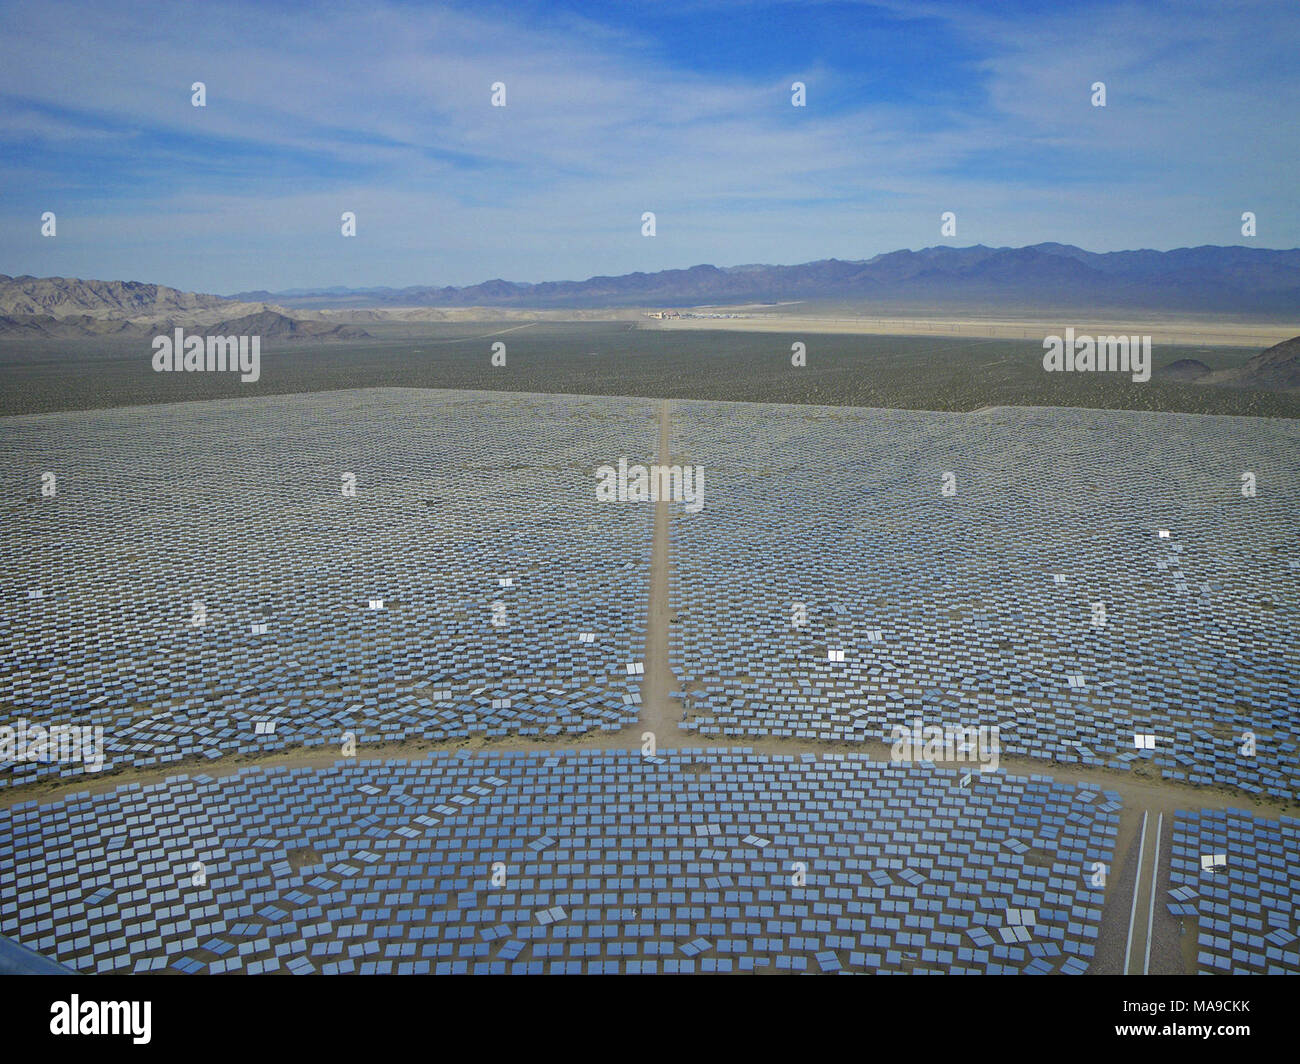 Ivanpah Solar Electric Generating System (ISEGS). Stock Photo